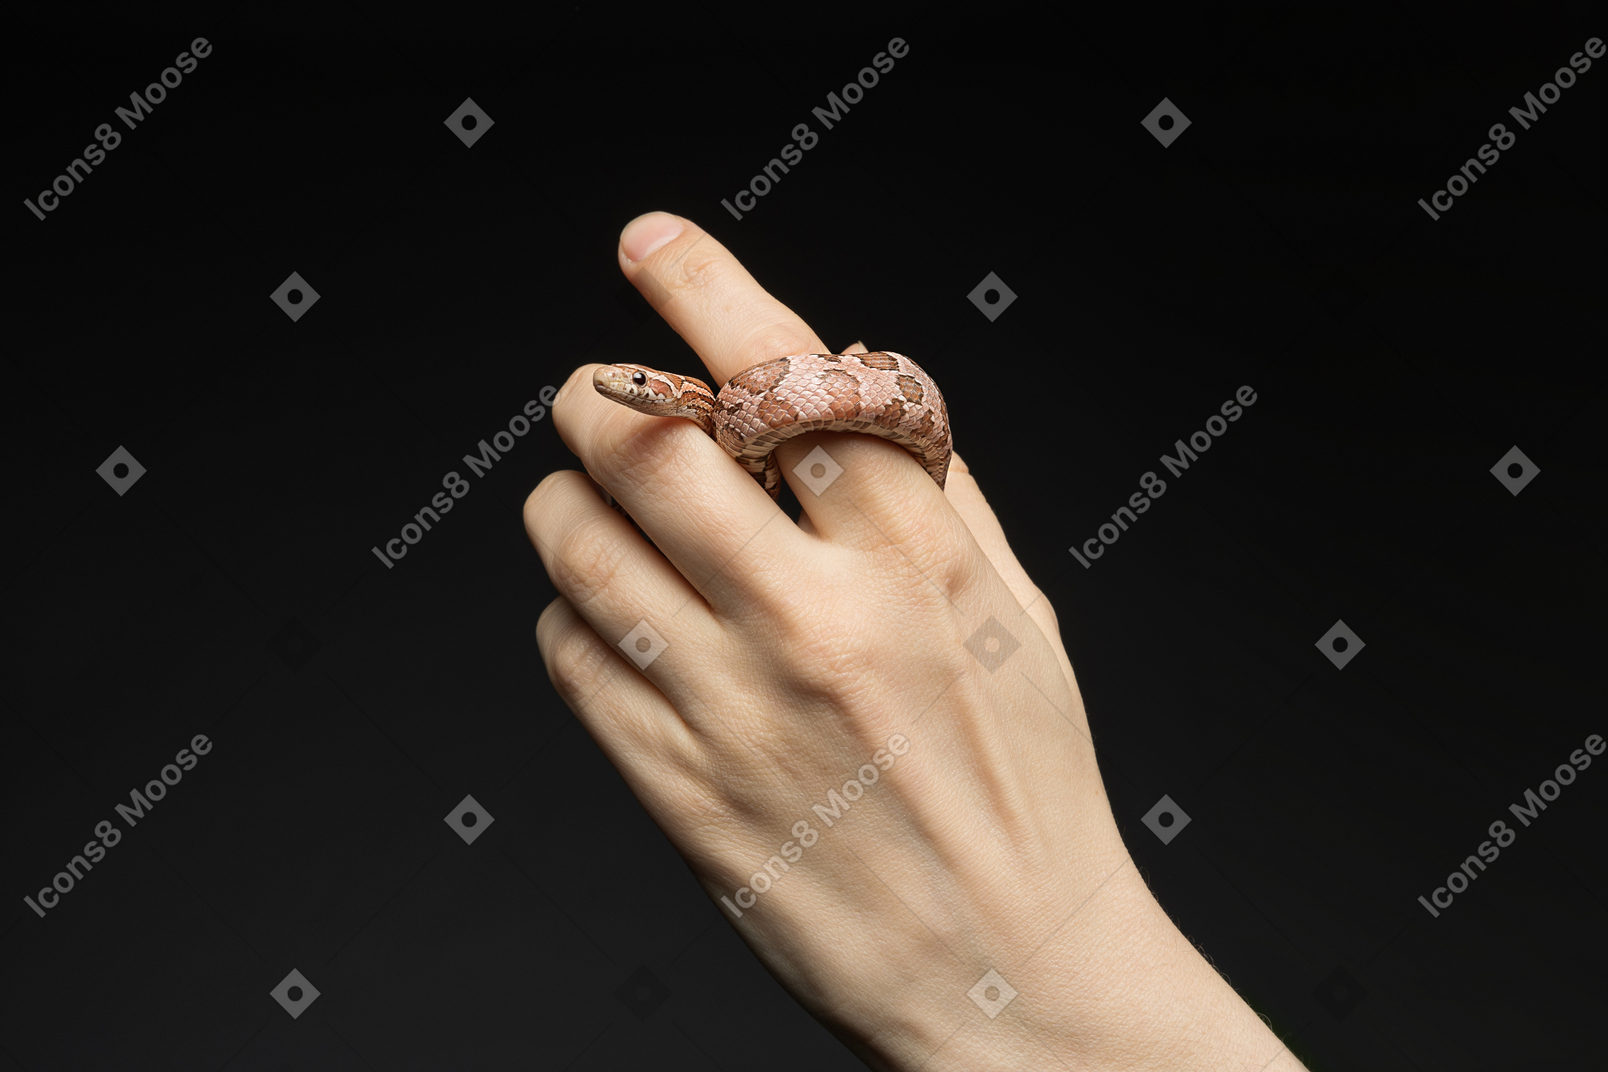 Little corn snake curving around human finger